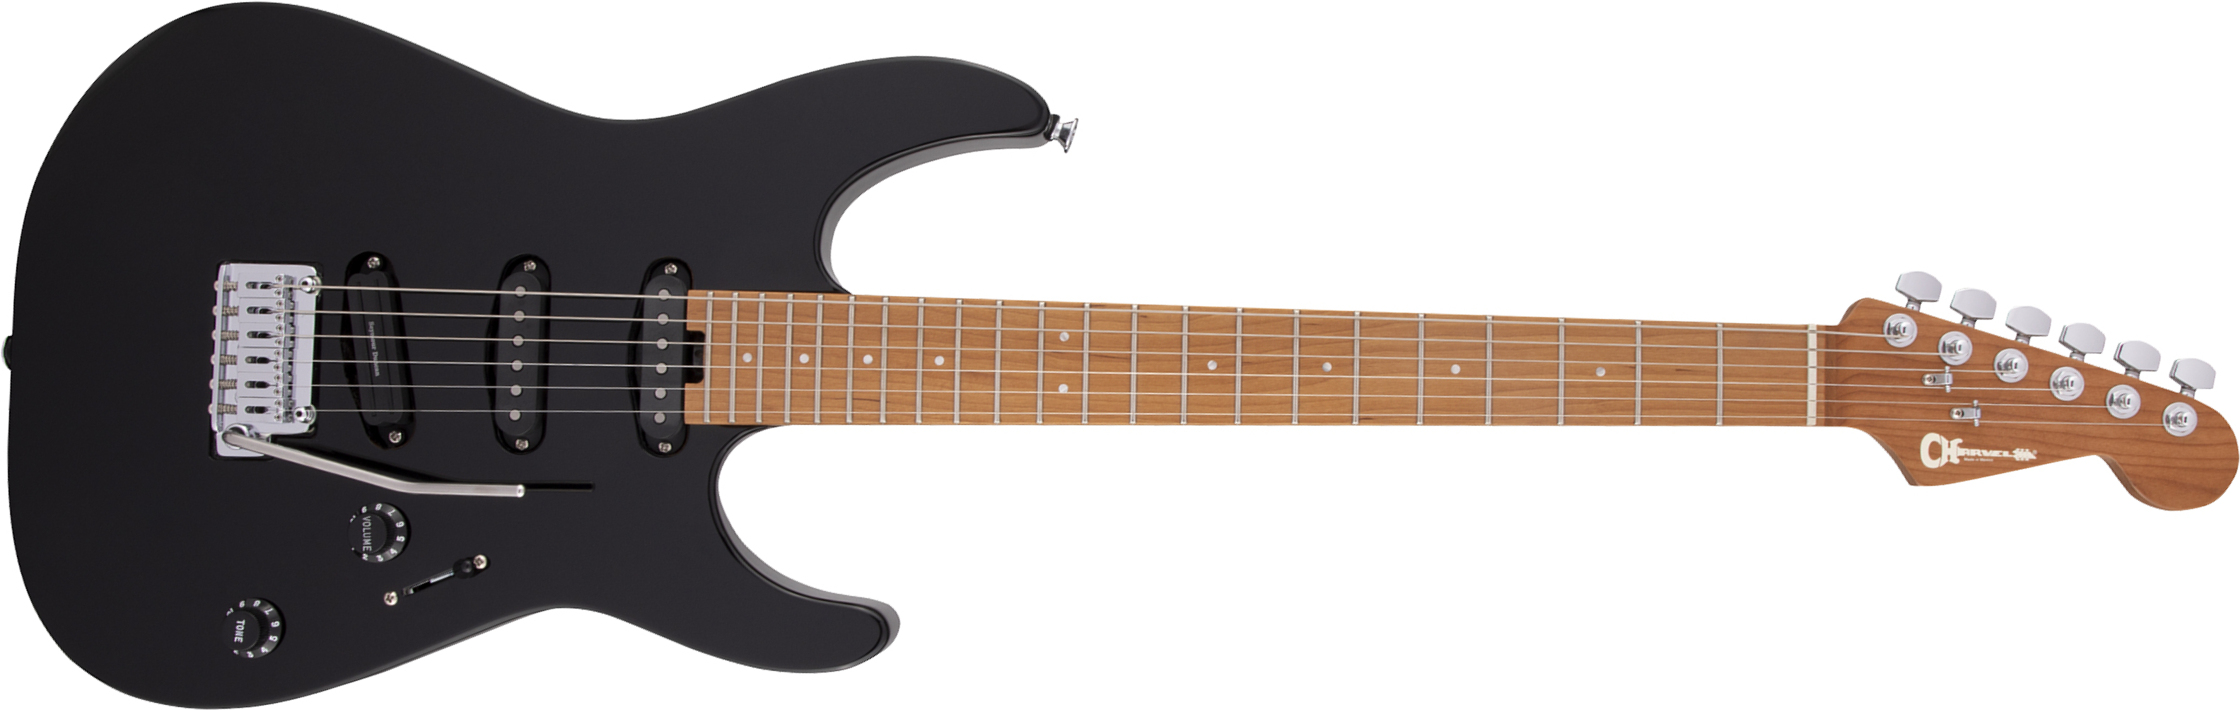 Charvel Dinky Dk22 Sss 2pt Cm Pro-mod 3s Seymour Duncan Trem Mn - Gloss Black - E-Gitarre in Str-Form - Main picture